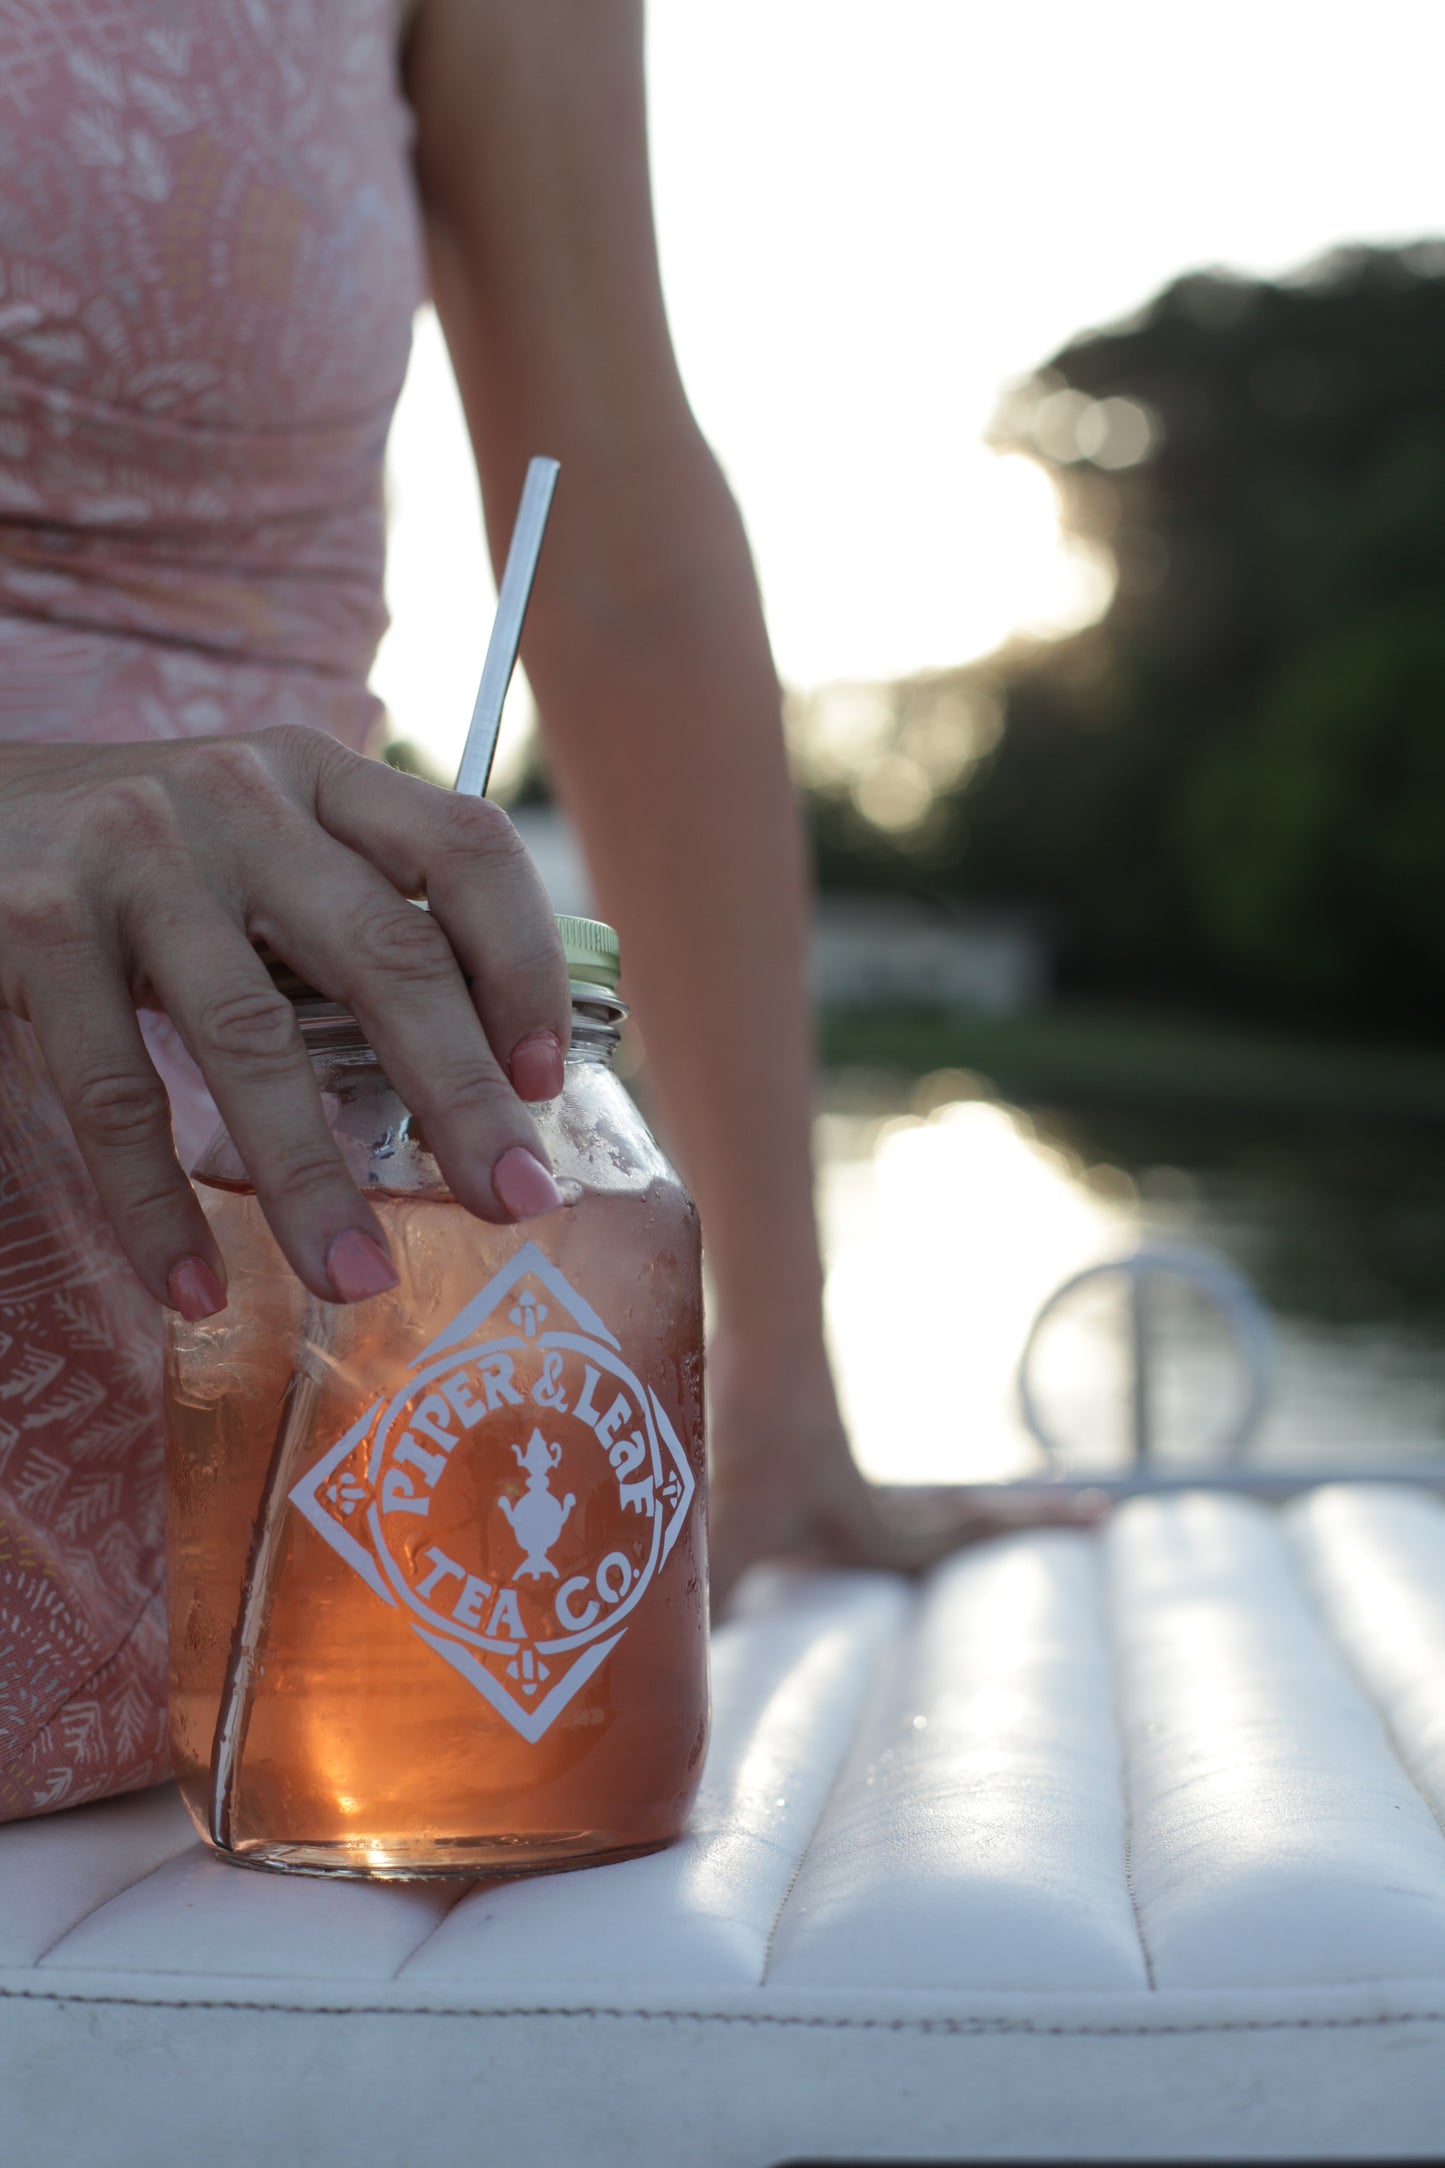 A woman sitting on a boat holding a Signature Mason Drinking Jar - Quart Size of Piper & Leaf Tea Co.iced tea.